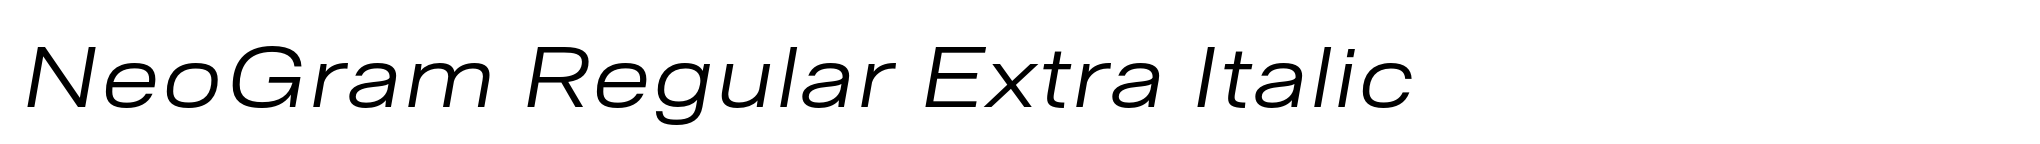 NeoGram Regular Extra Italic image